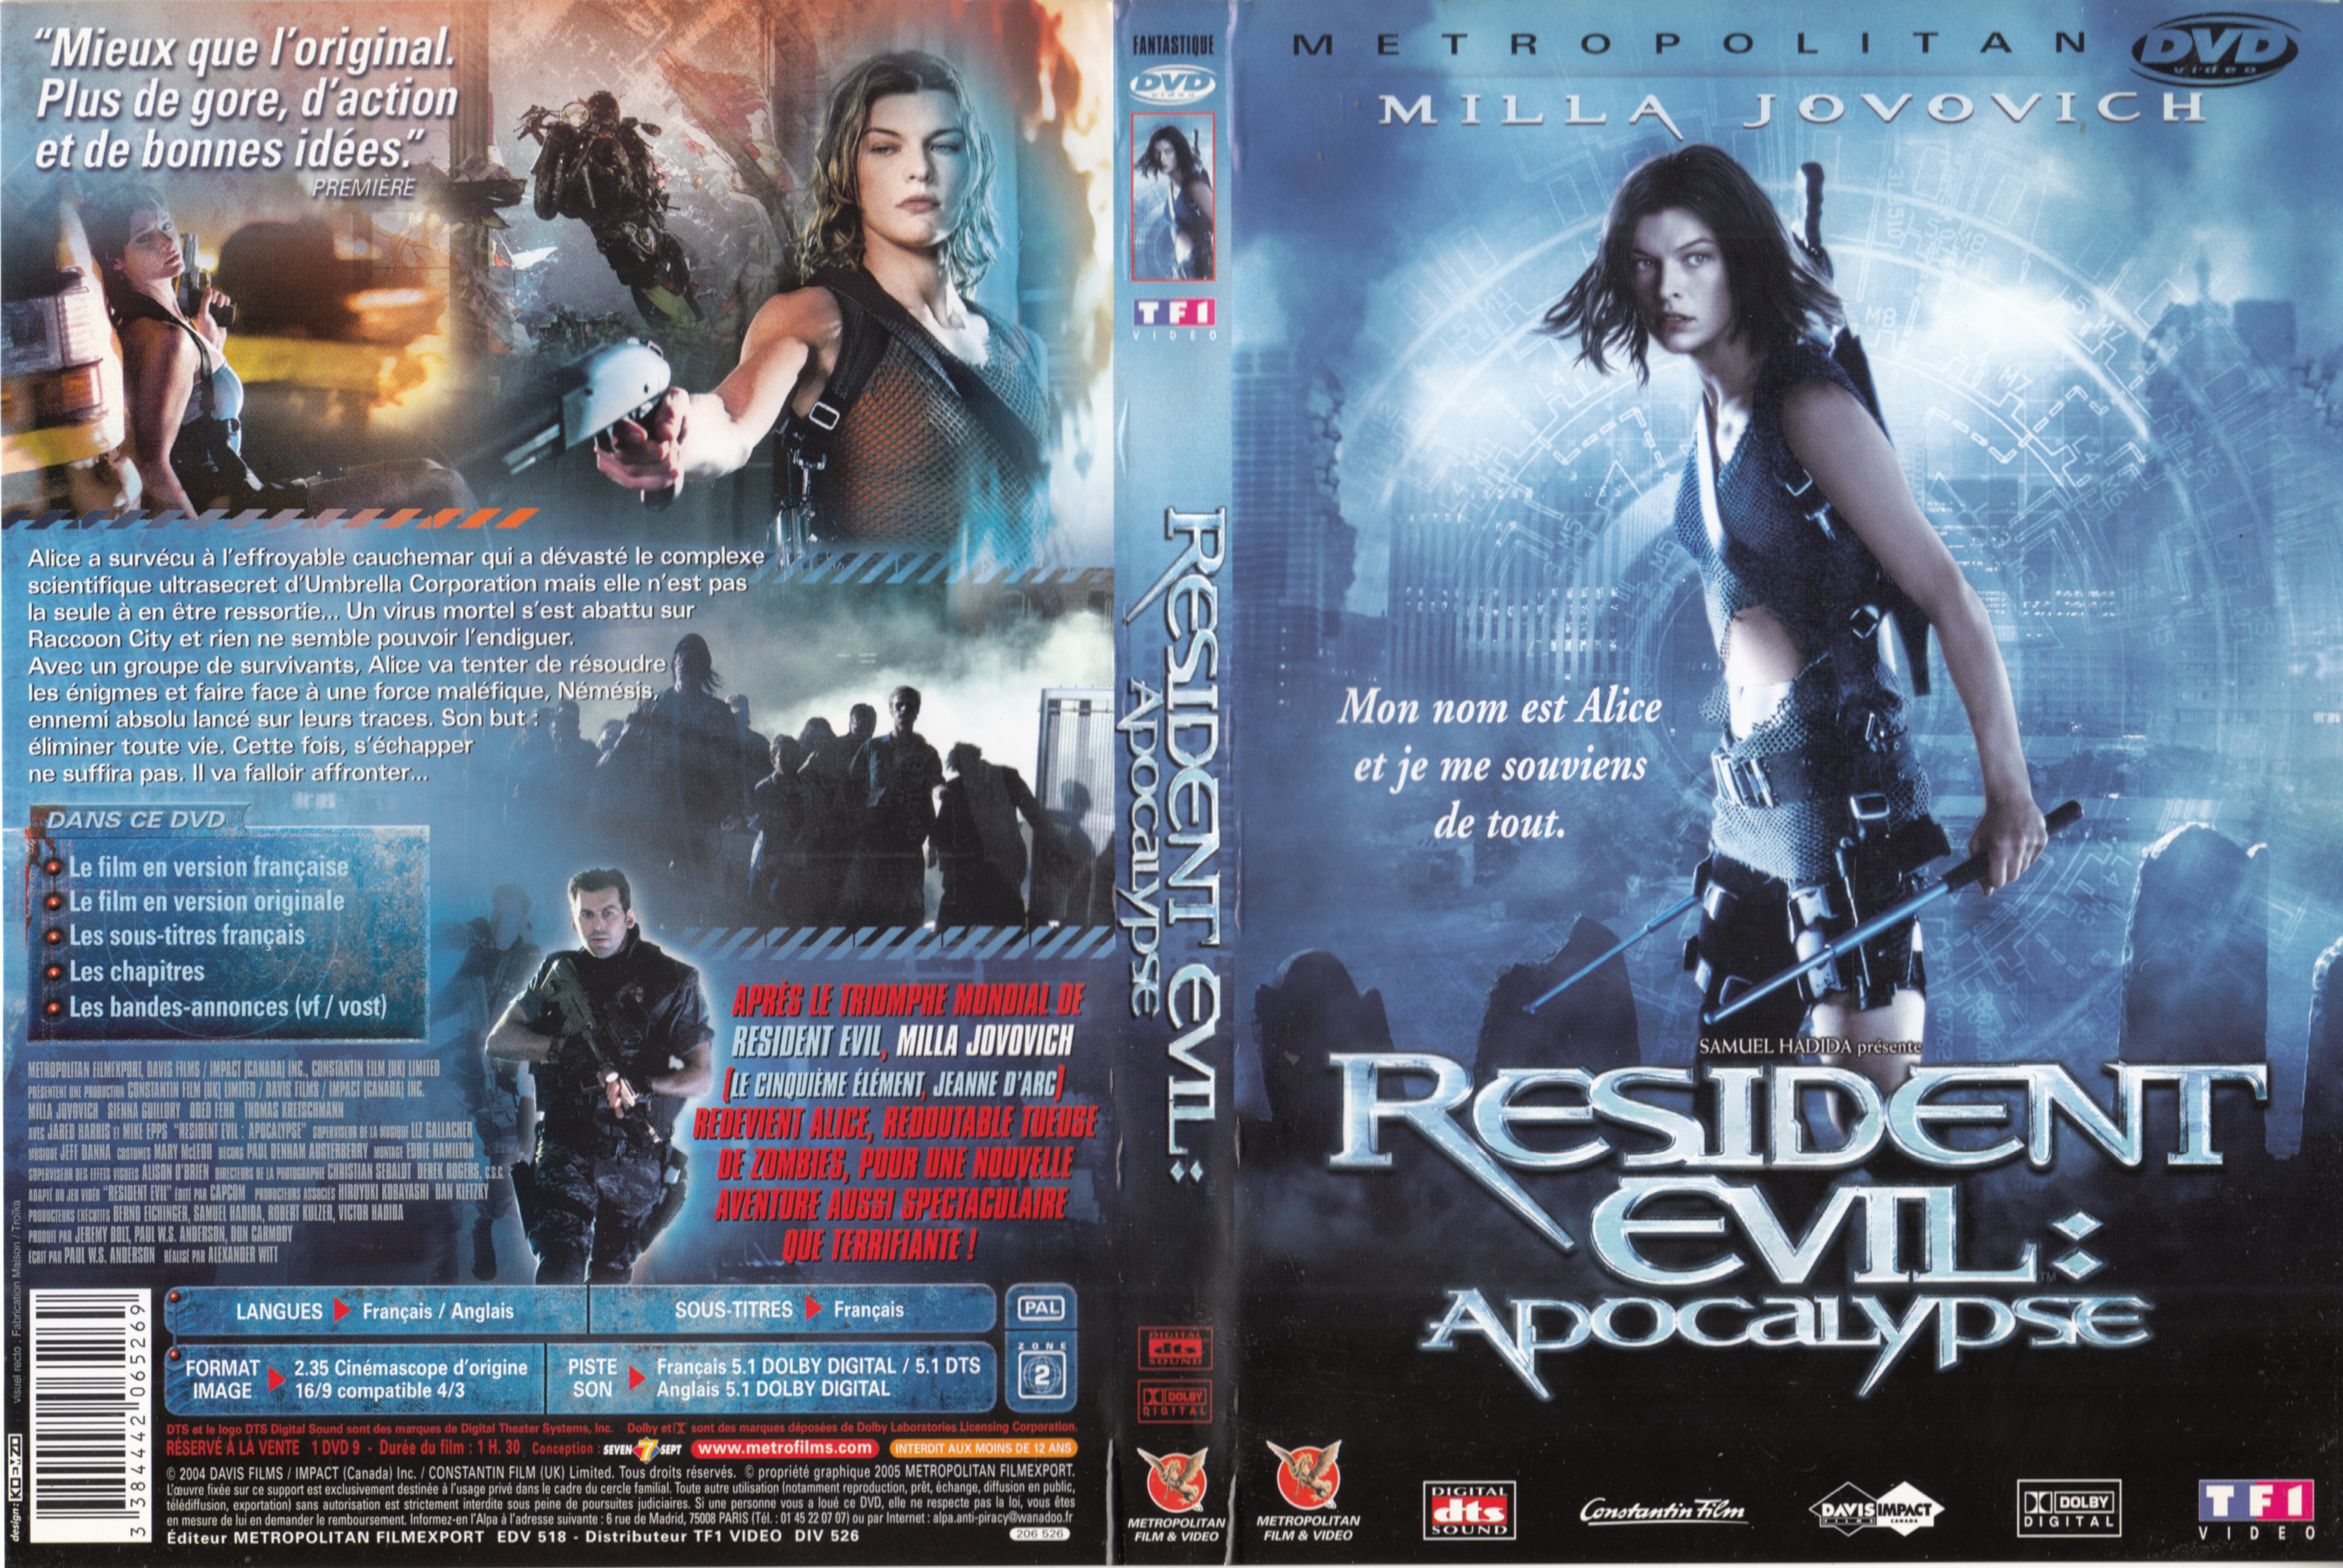 Jaquette DVD Resident Evil Apocalypse